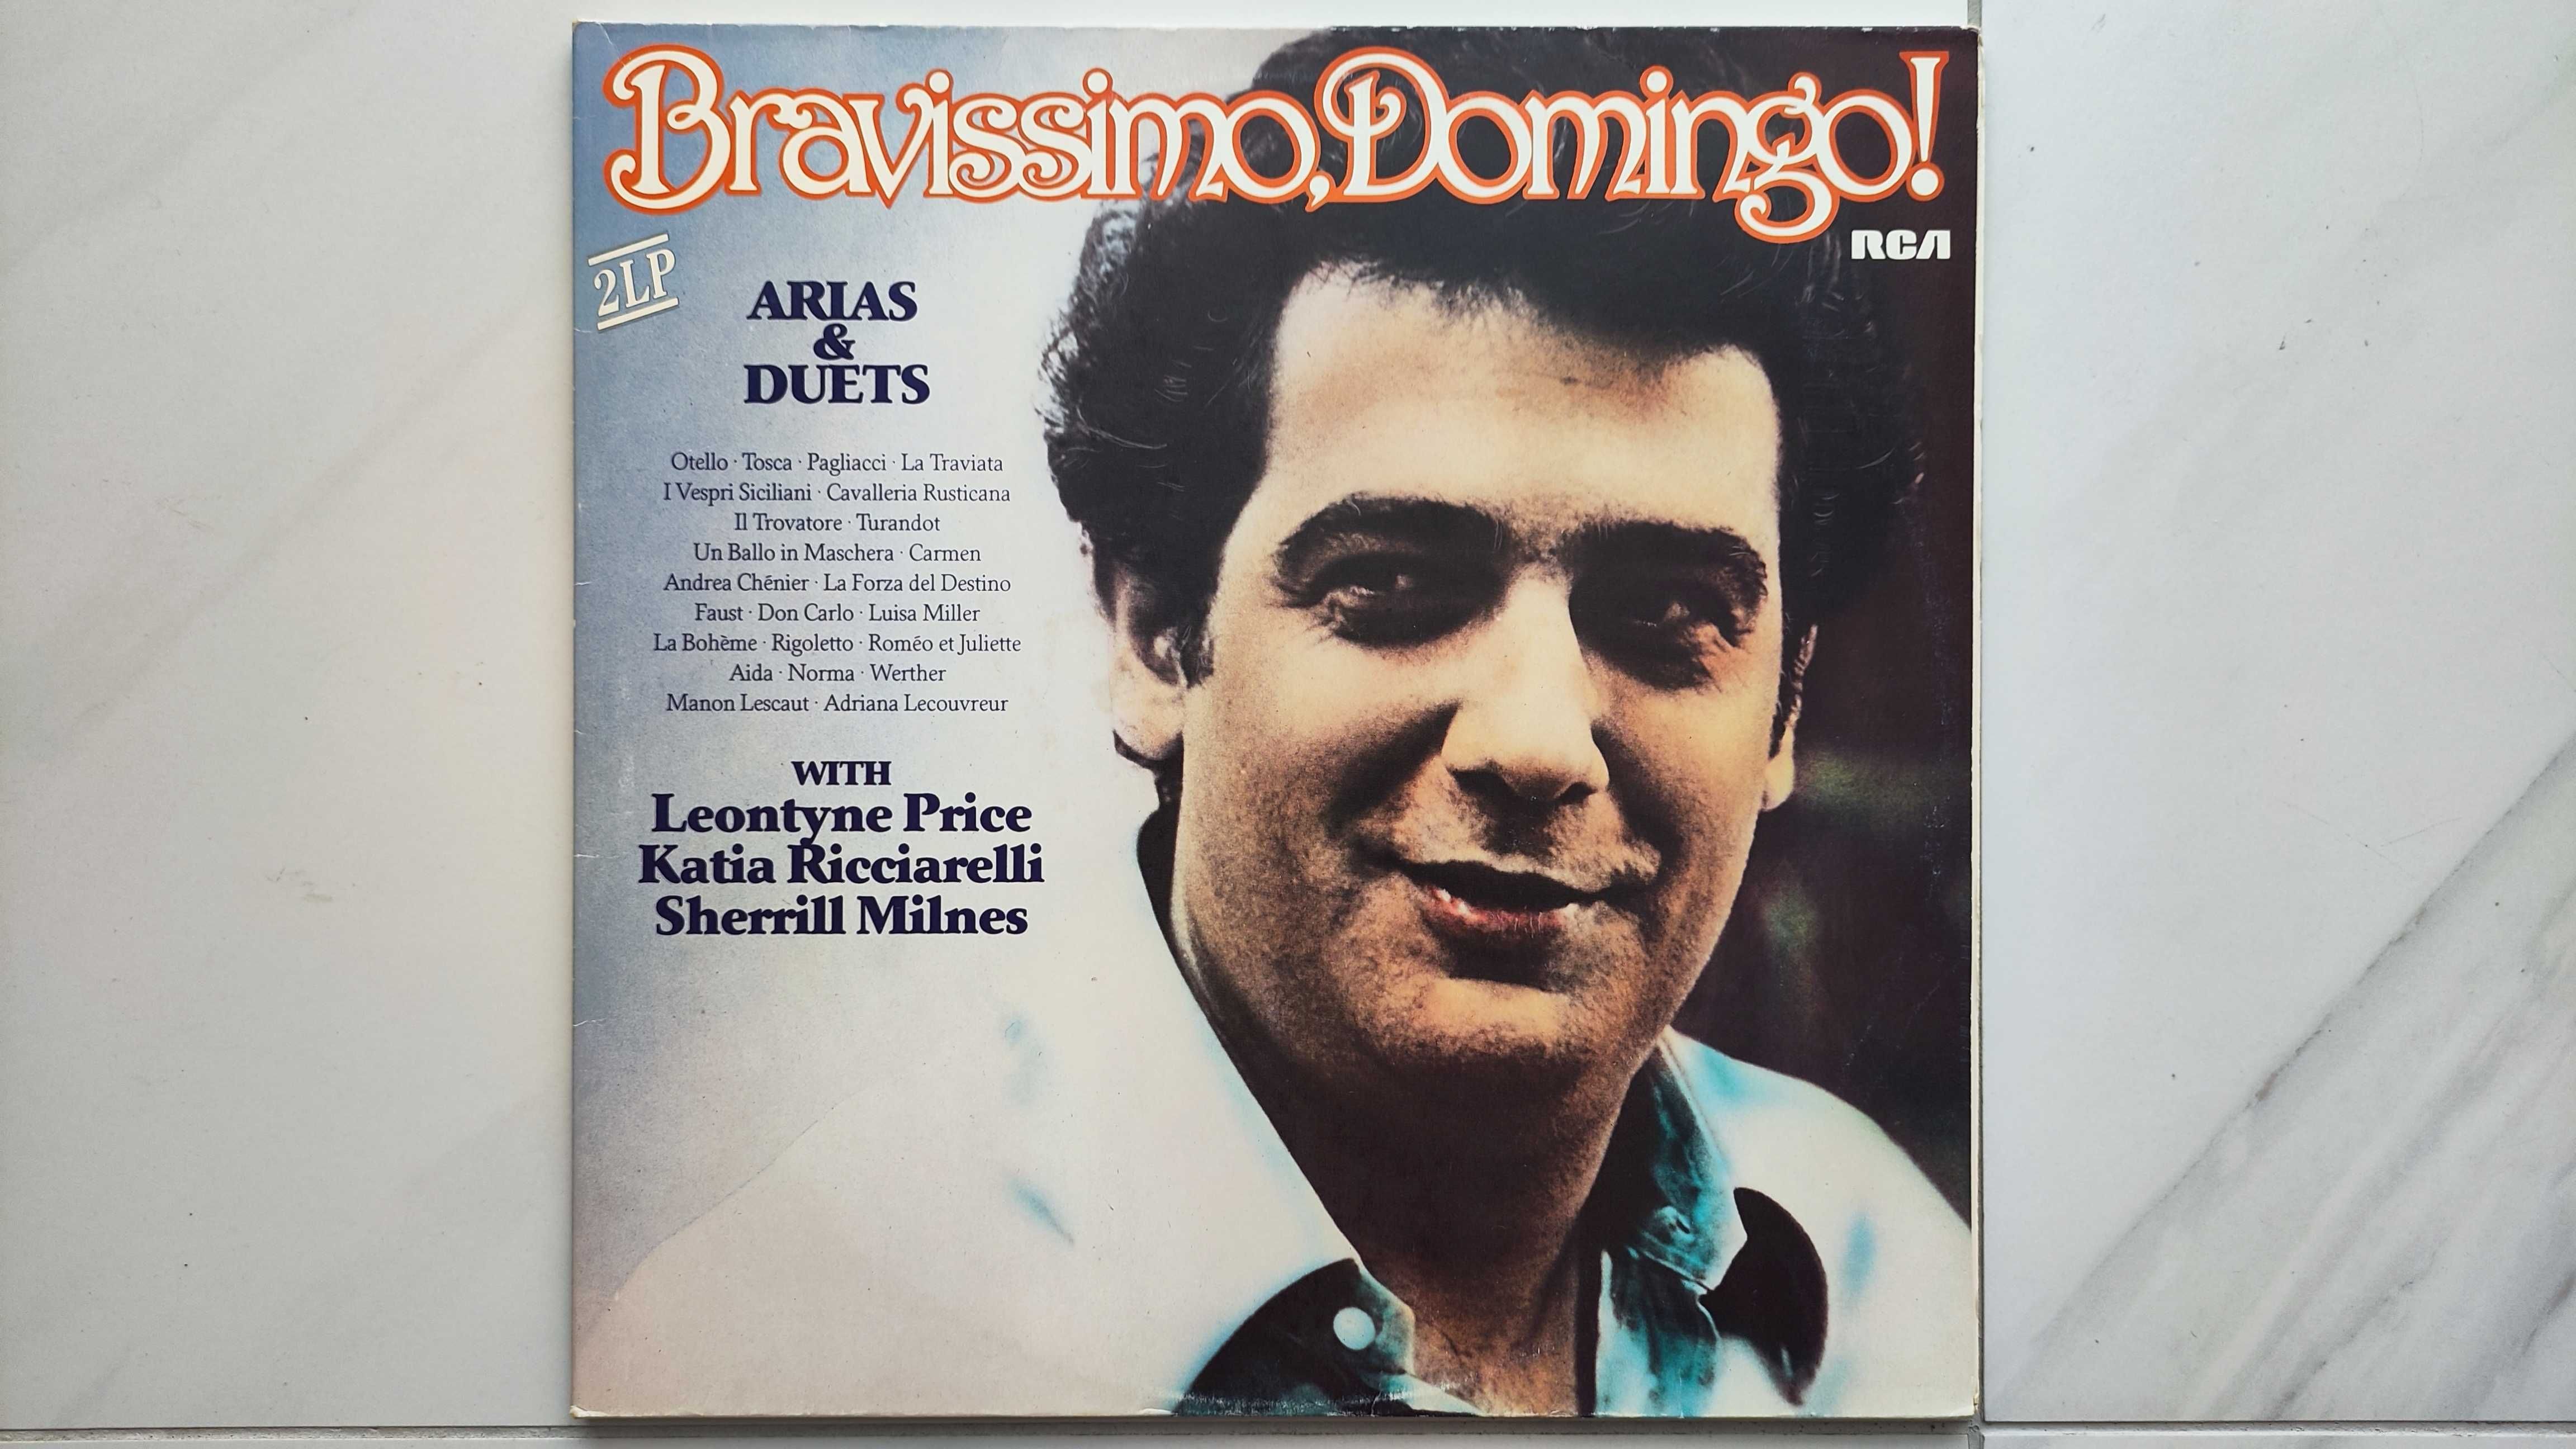 Płyta winylowa Placido Domingo – Bravissimo, Domingo!